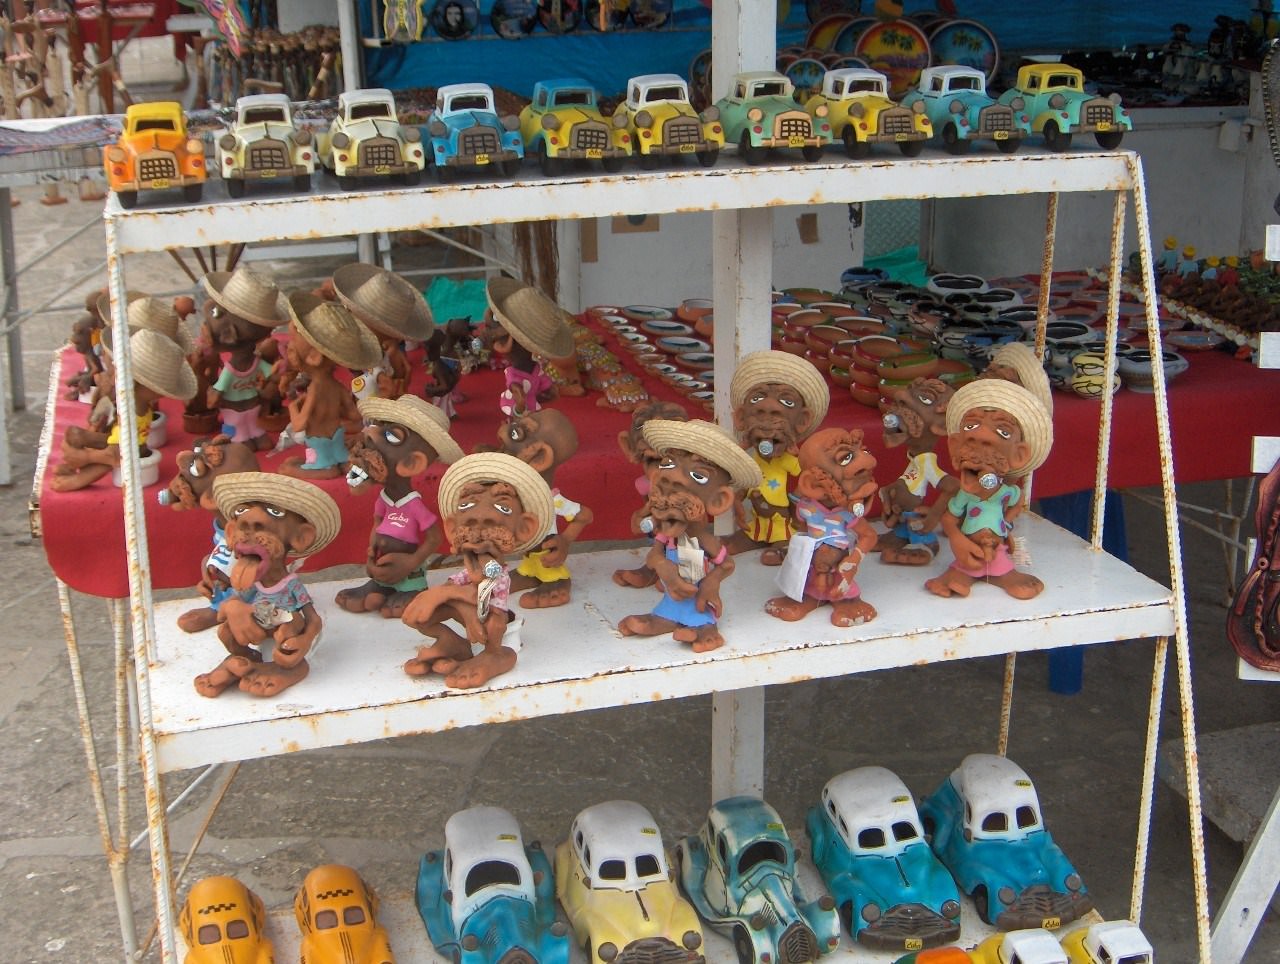 Cuba Varadero, encore de l'artisanat pour touristes